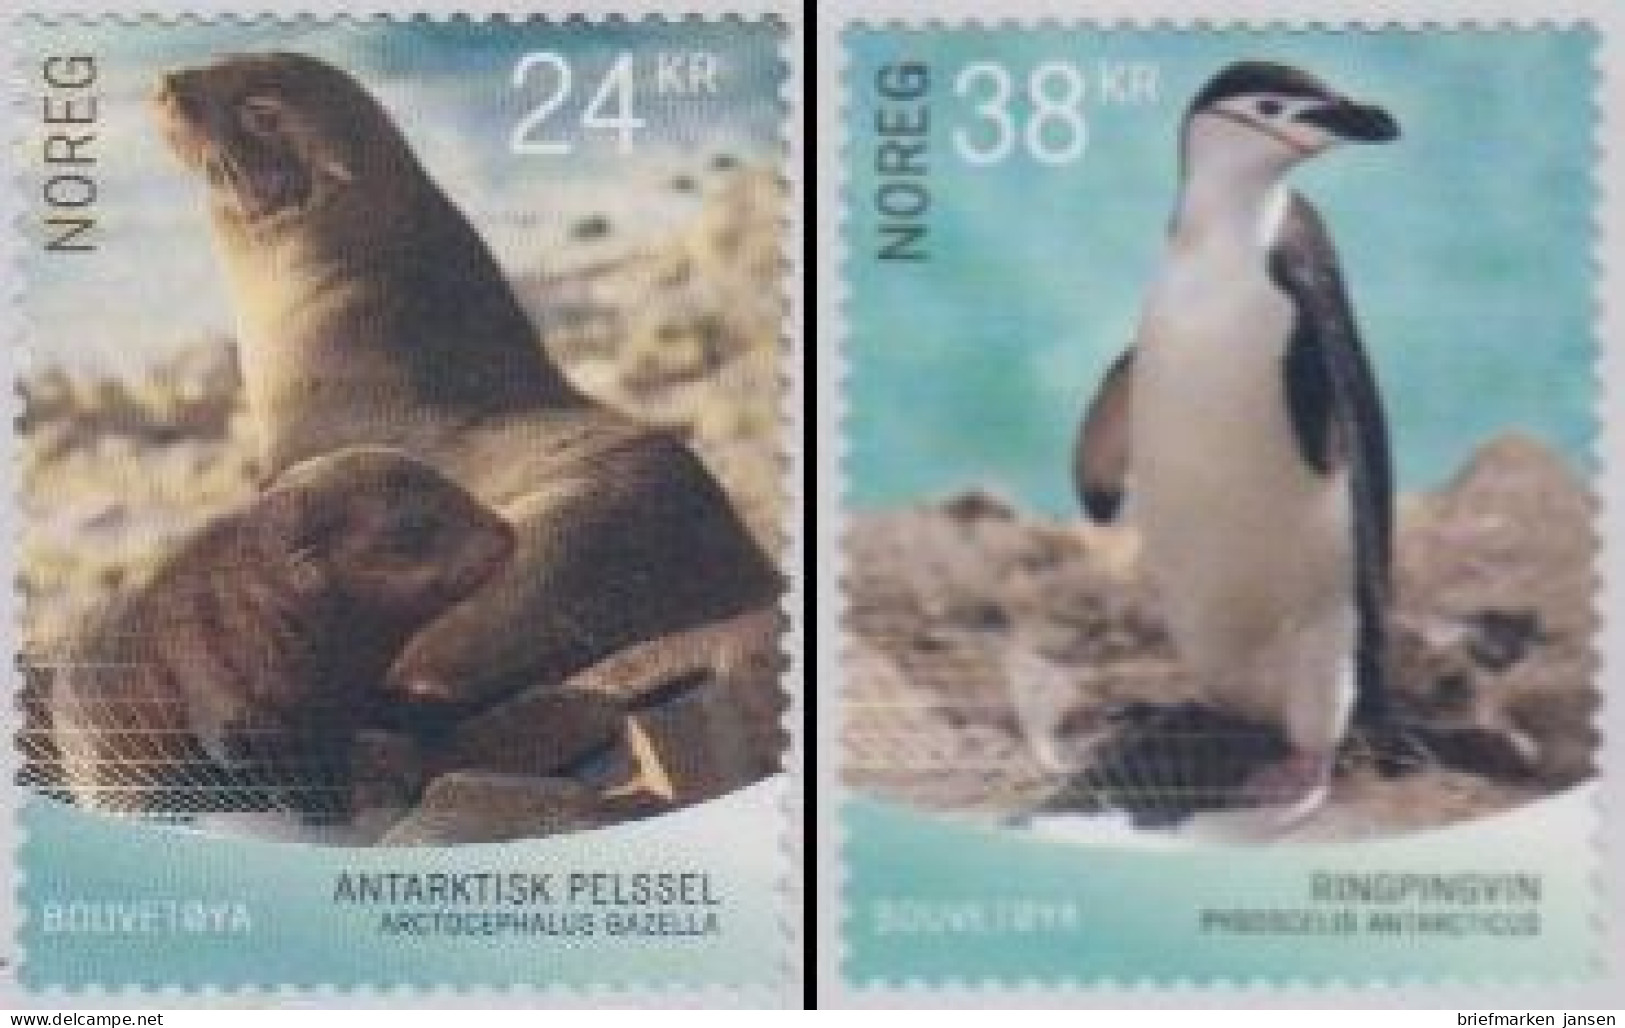 Norwegen MiNr. 1962-63 Fauna D.Bouvetinsel, Seebär, Pinguin, Skl (2 Werte) - Unused Stamps